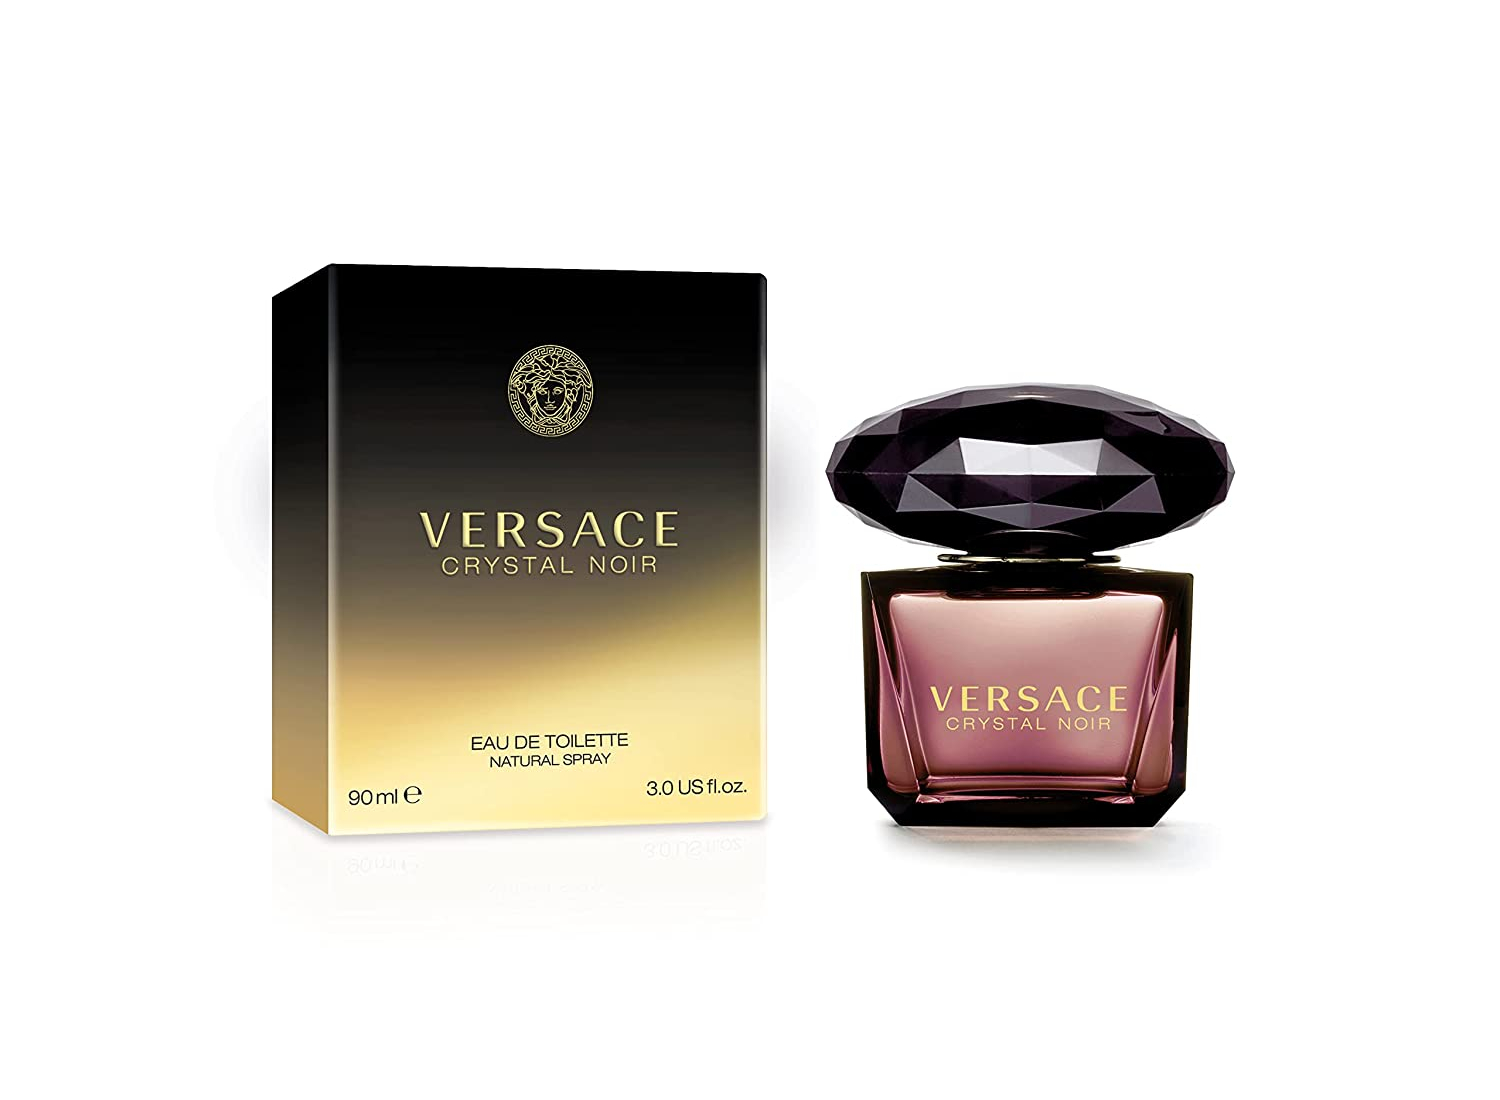 A bottle of Versace's Crystal Noir perfume.